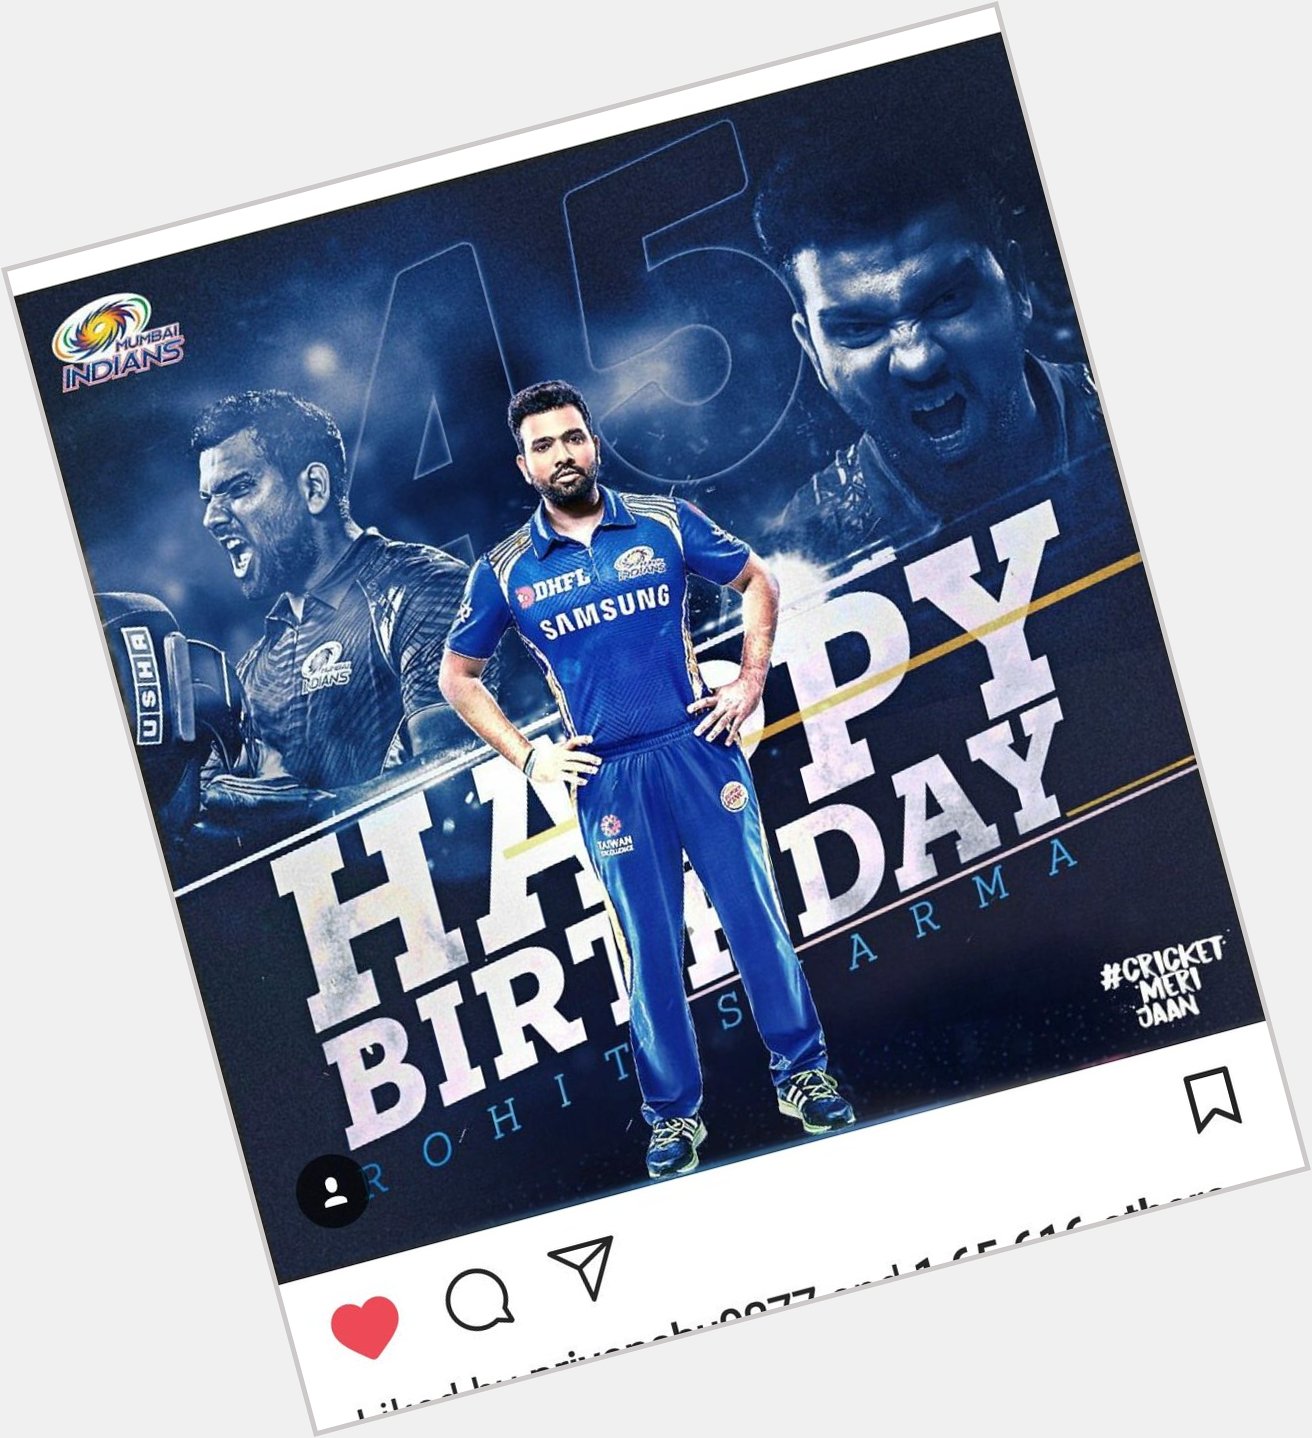   Happy Birthday my favourite cricketer Rohit sharma       